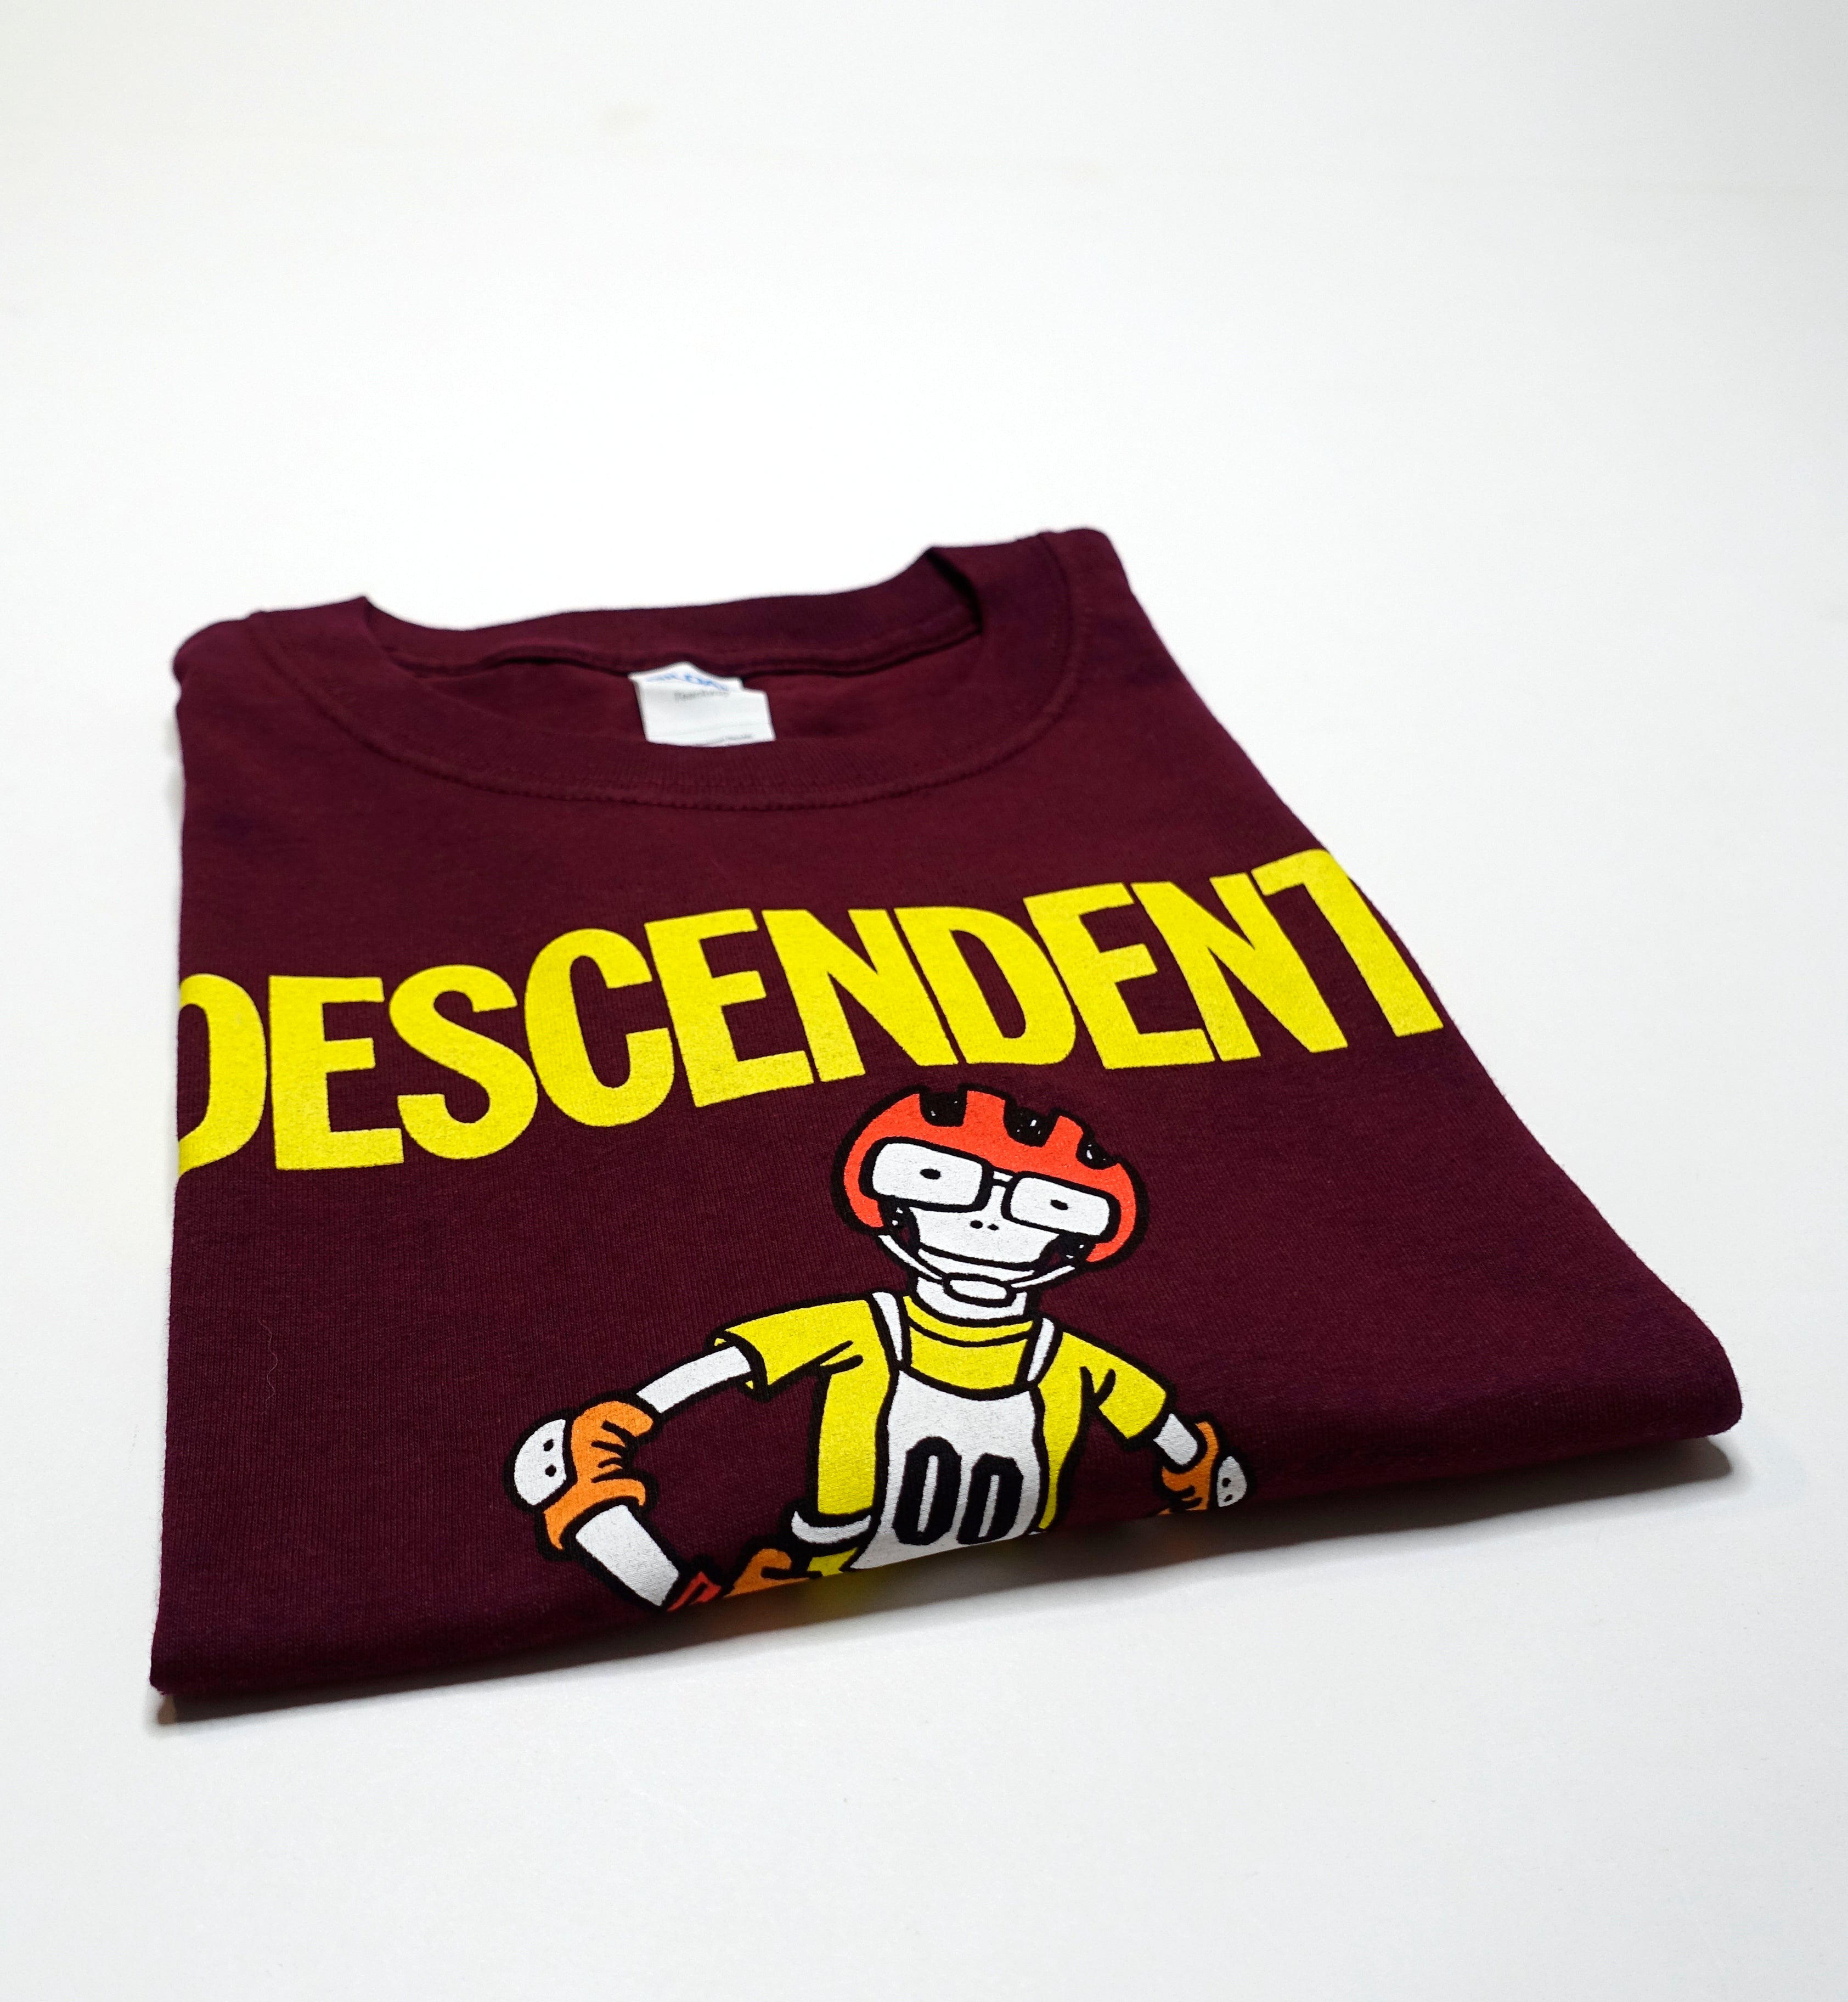 Descendents - Santa Cruz 2017 Night 2 Tour Shirt Size Large